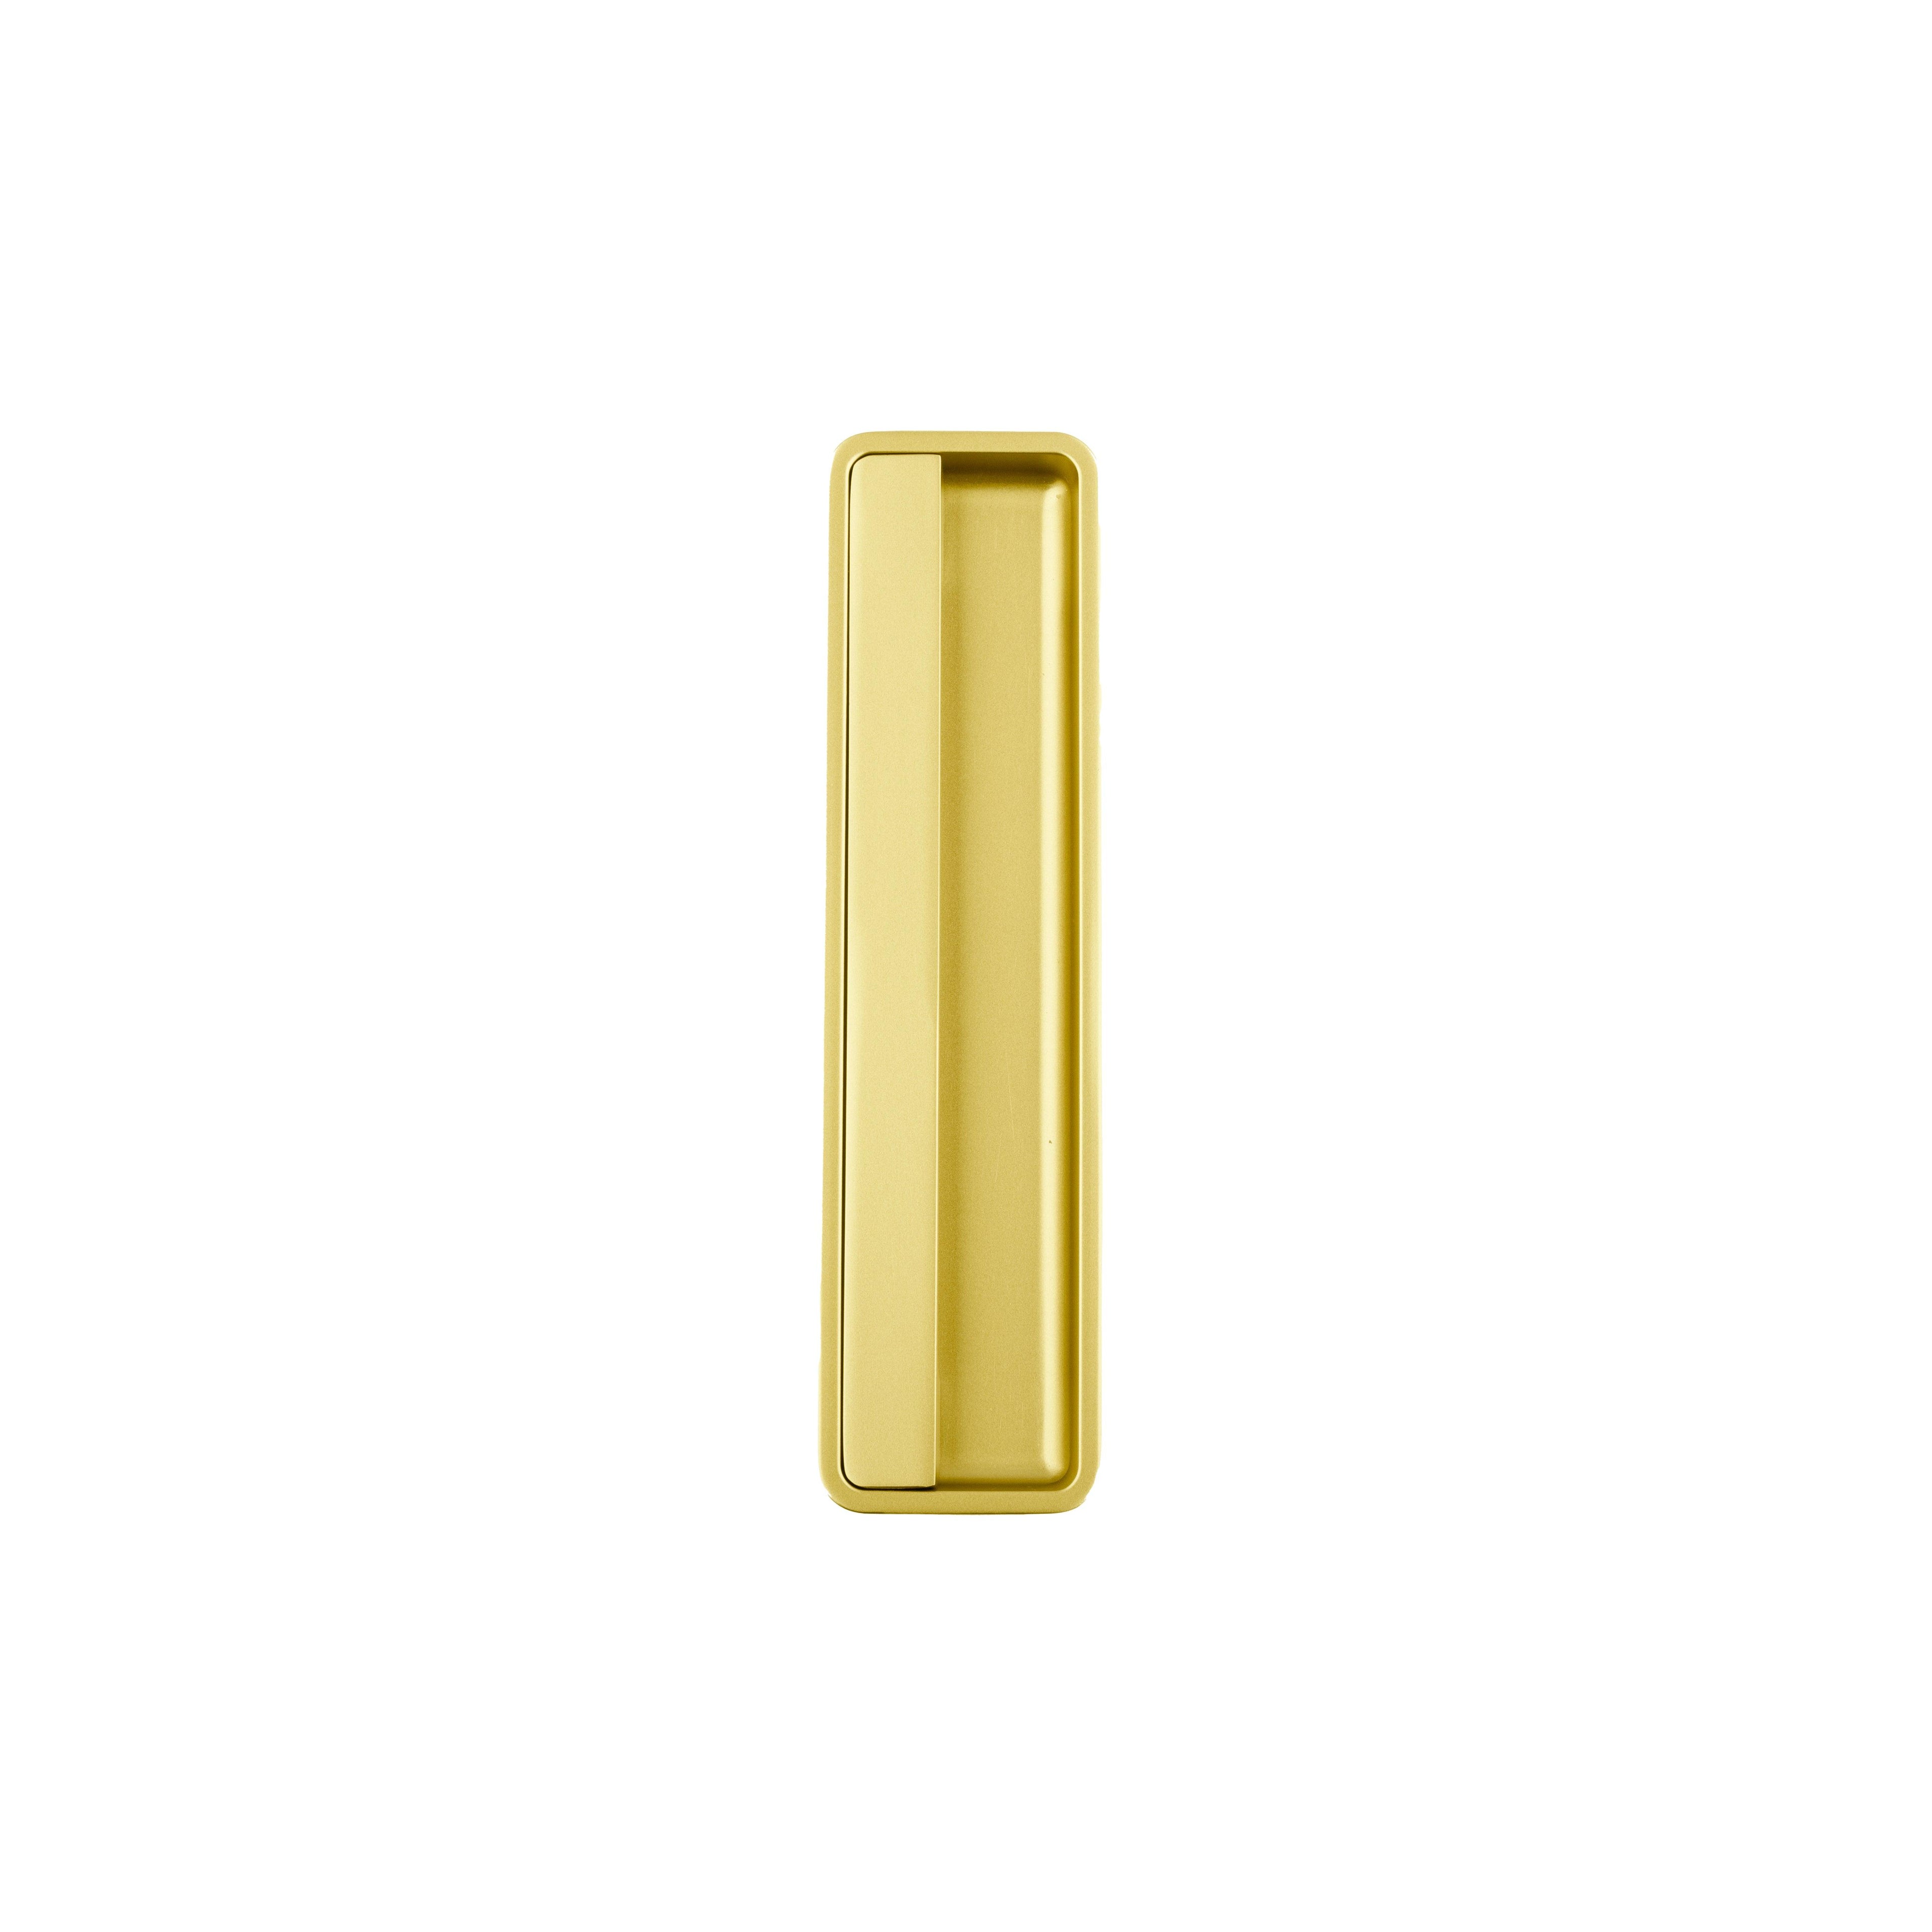 Concealed Semi Square Handle Knob 200mm / Gold / Zinc Alloy - M A N T A R A